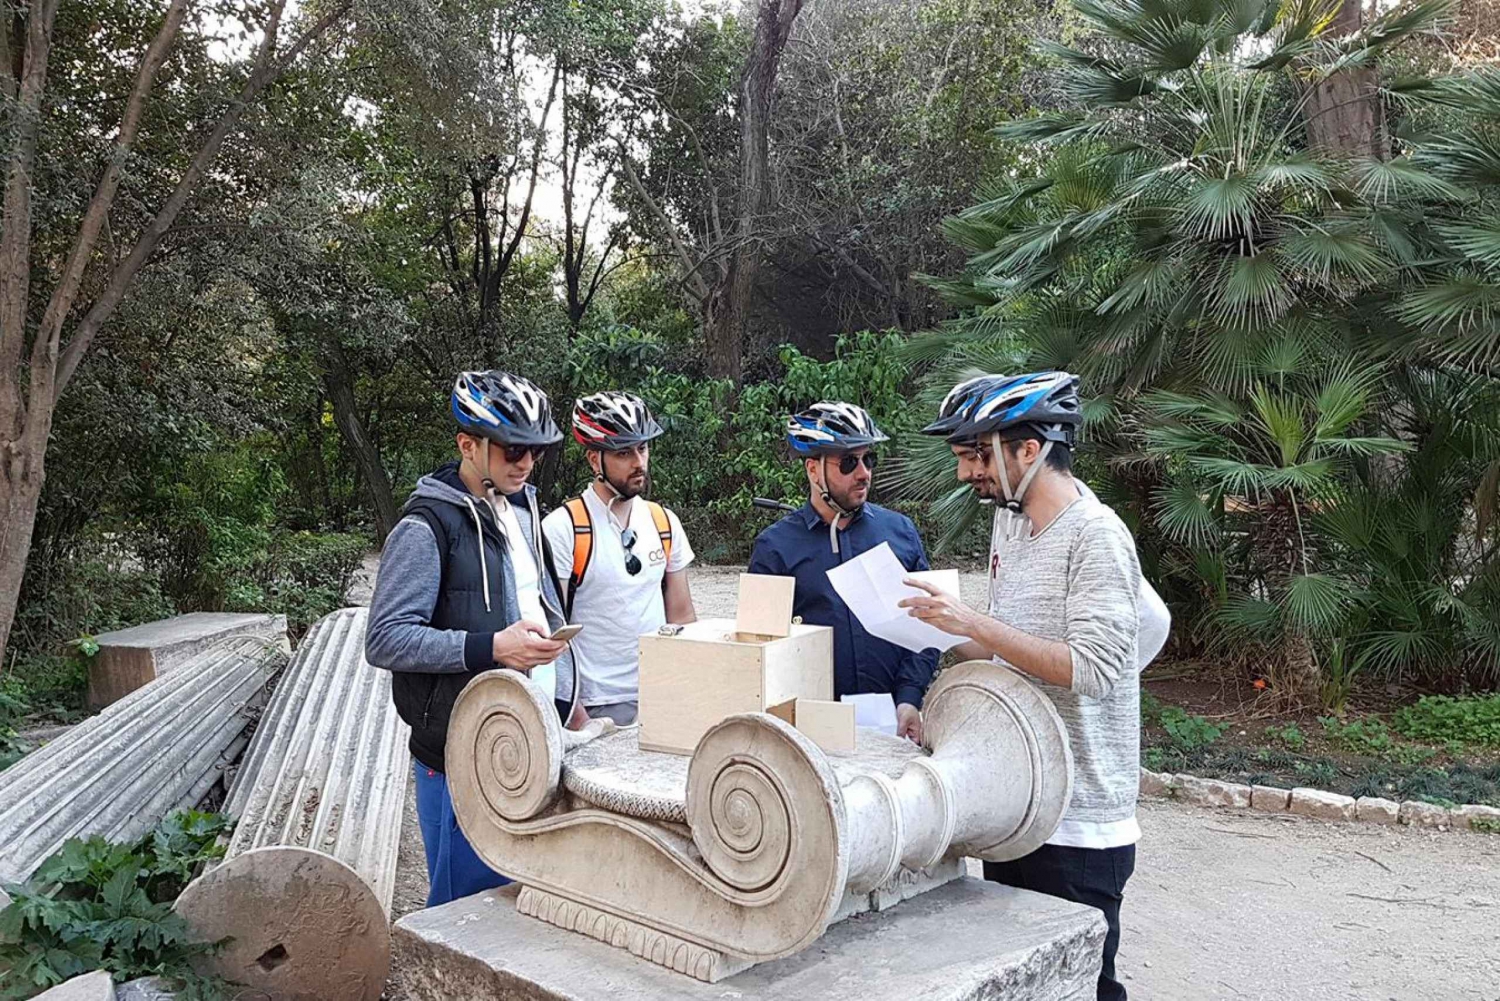 Athens Mystery Tour on Electric Trikke Bikes